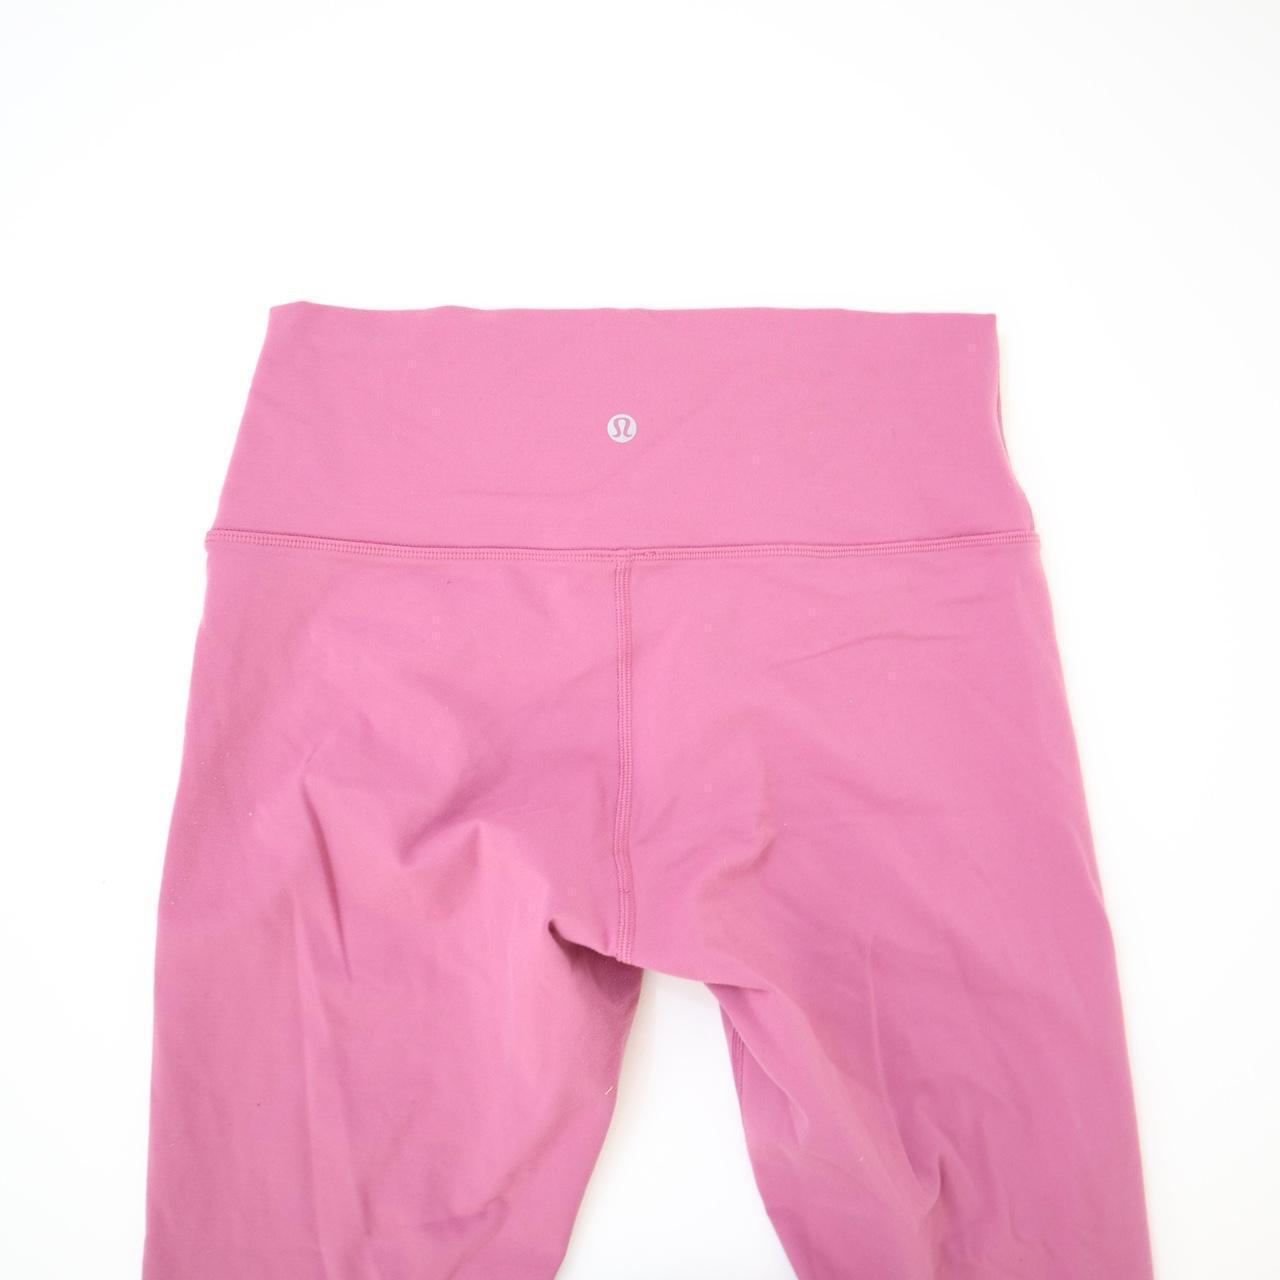 Product Image 3 - Pink lululemon leggings
Cute pink SHORT